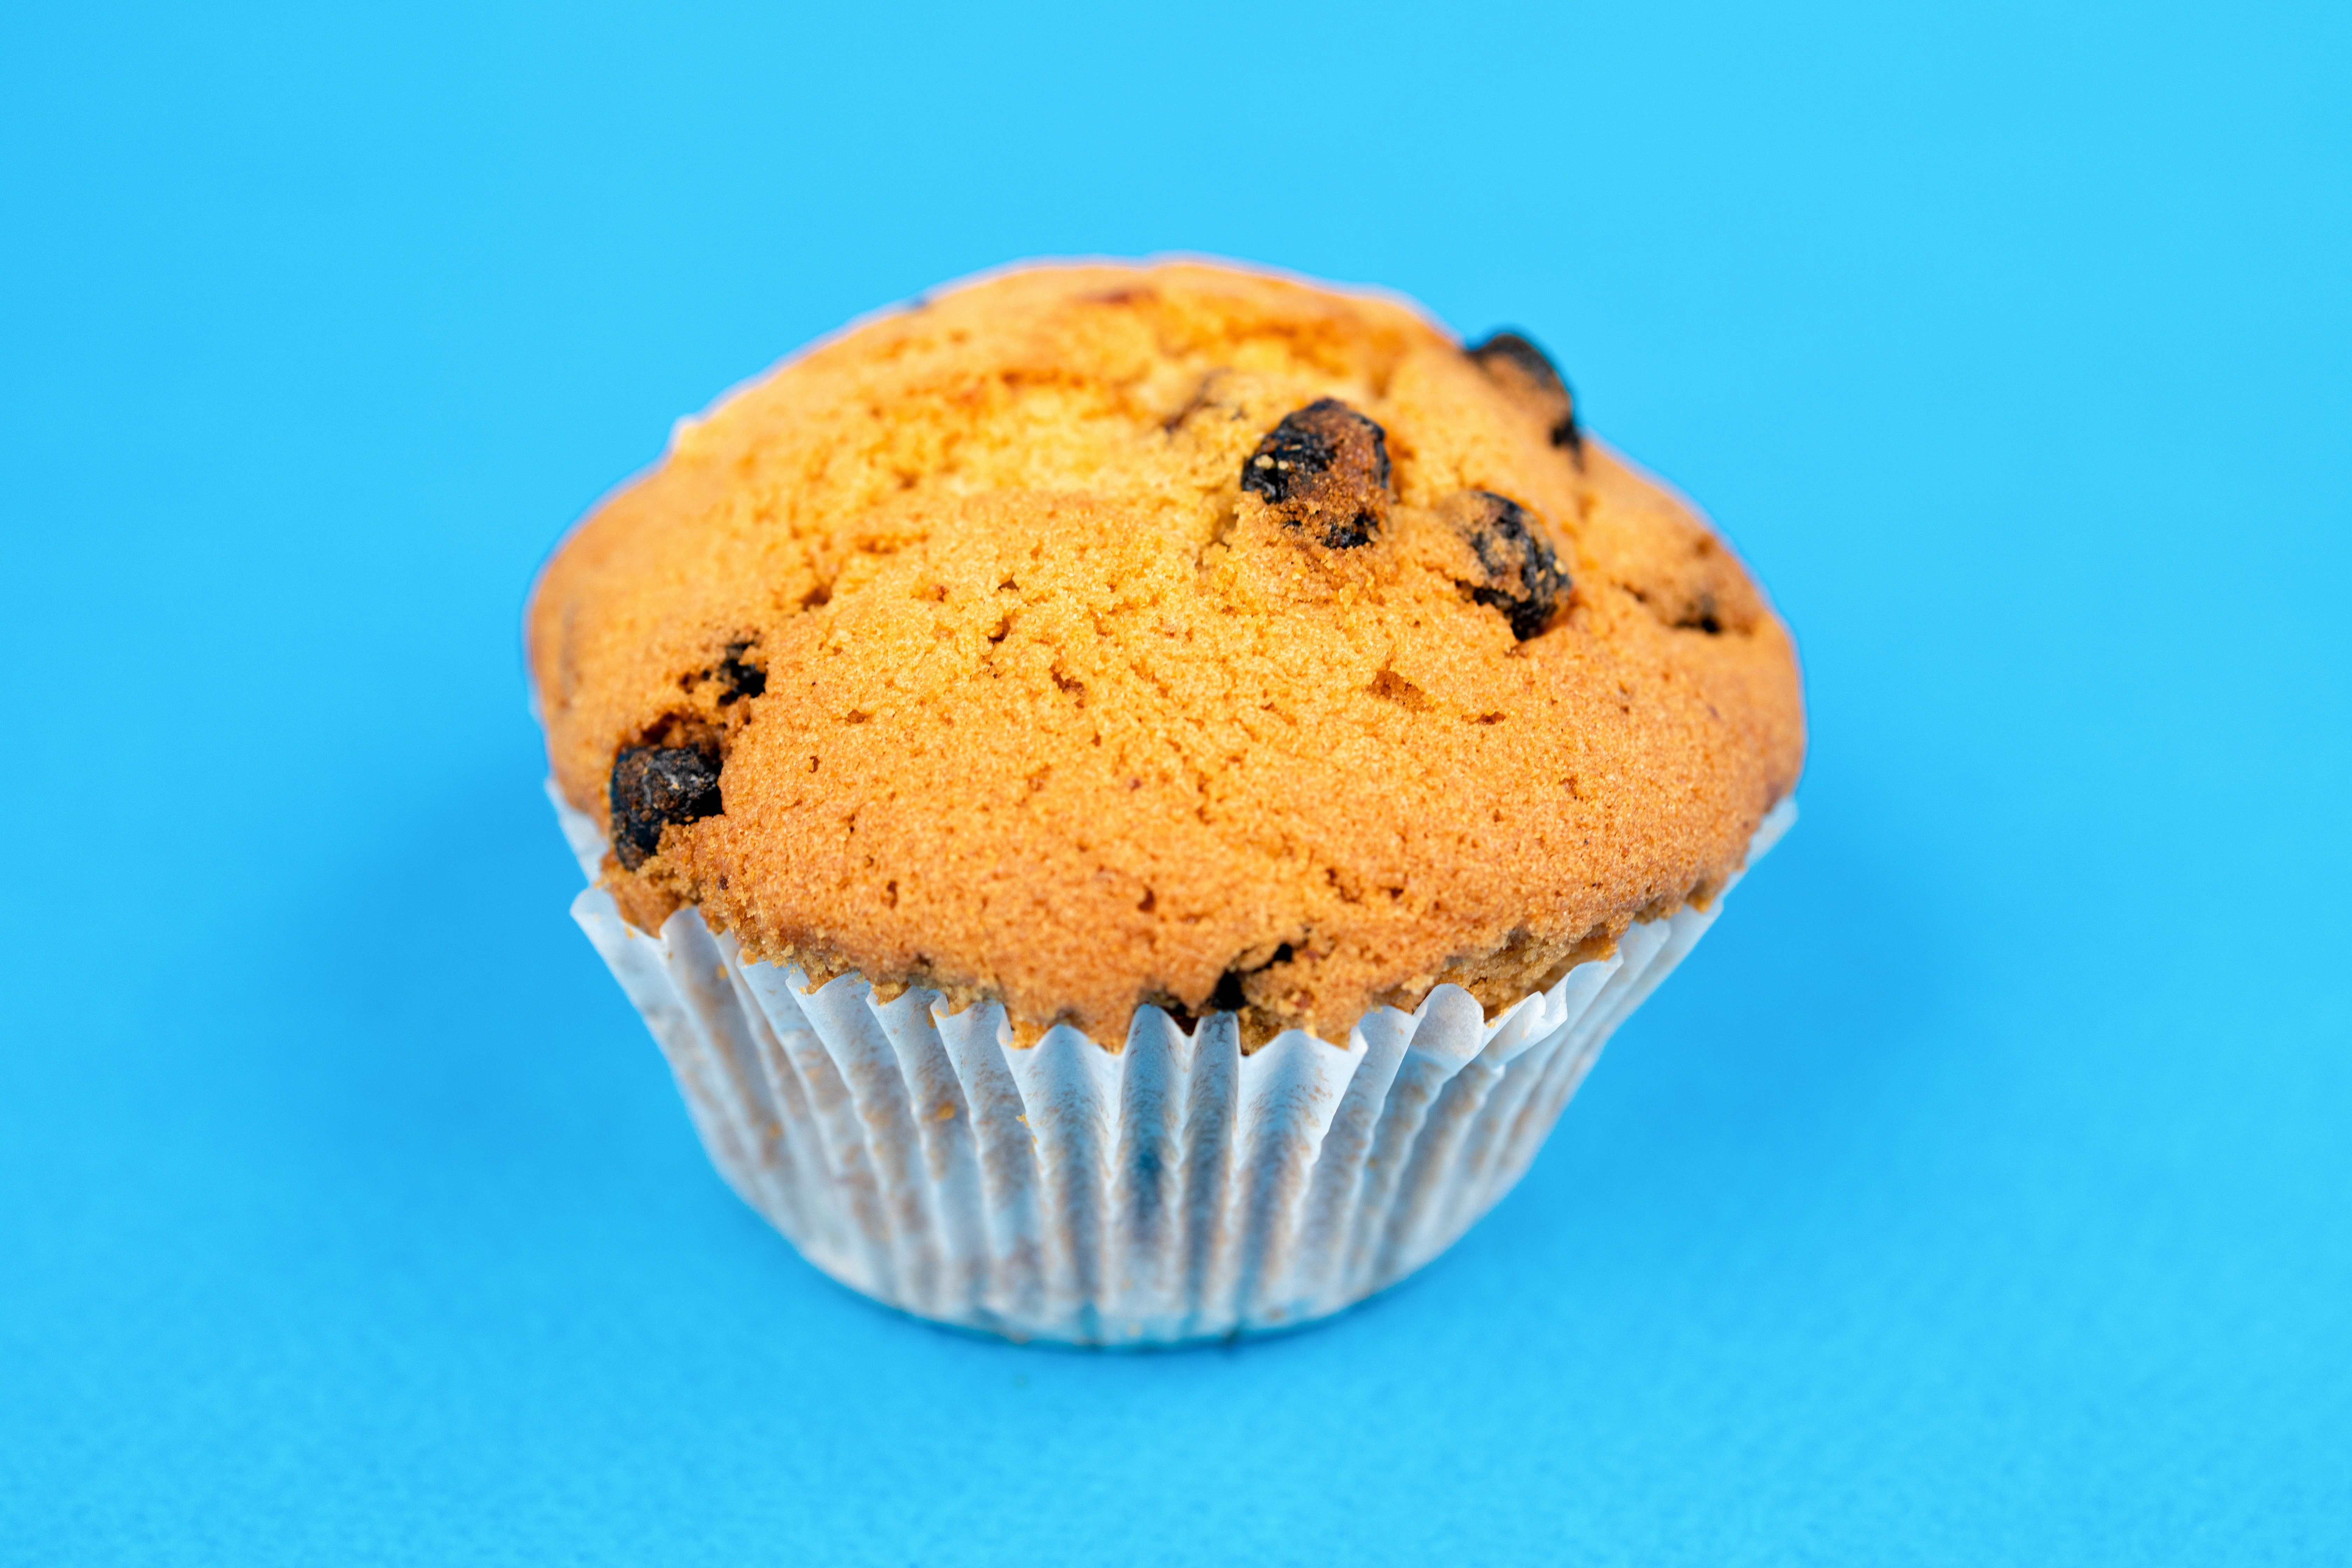 A muffin | Source: Pexels